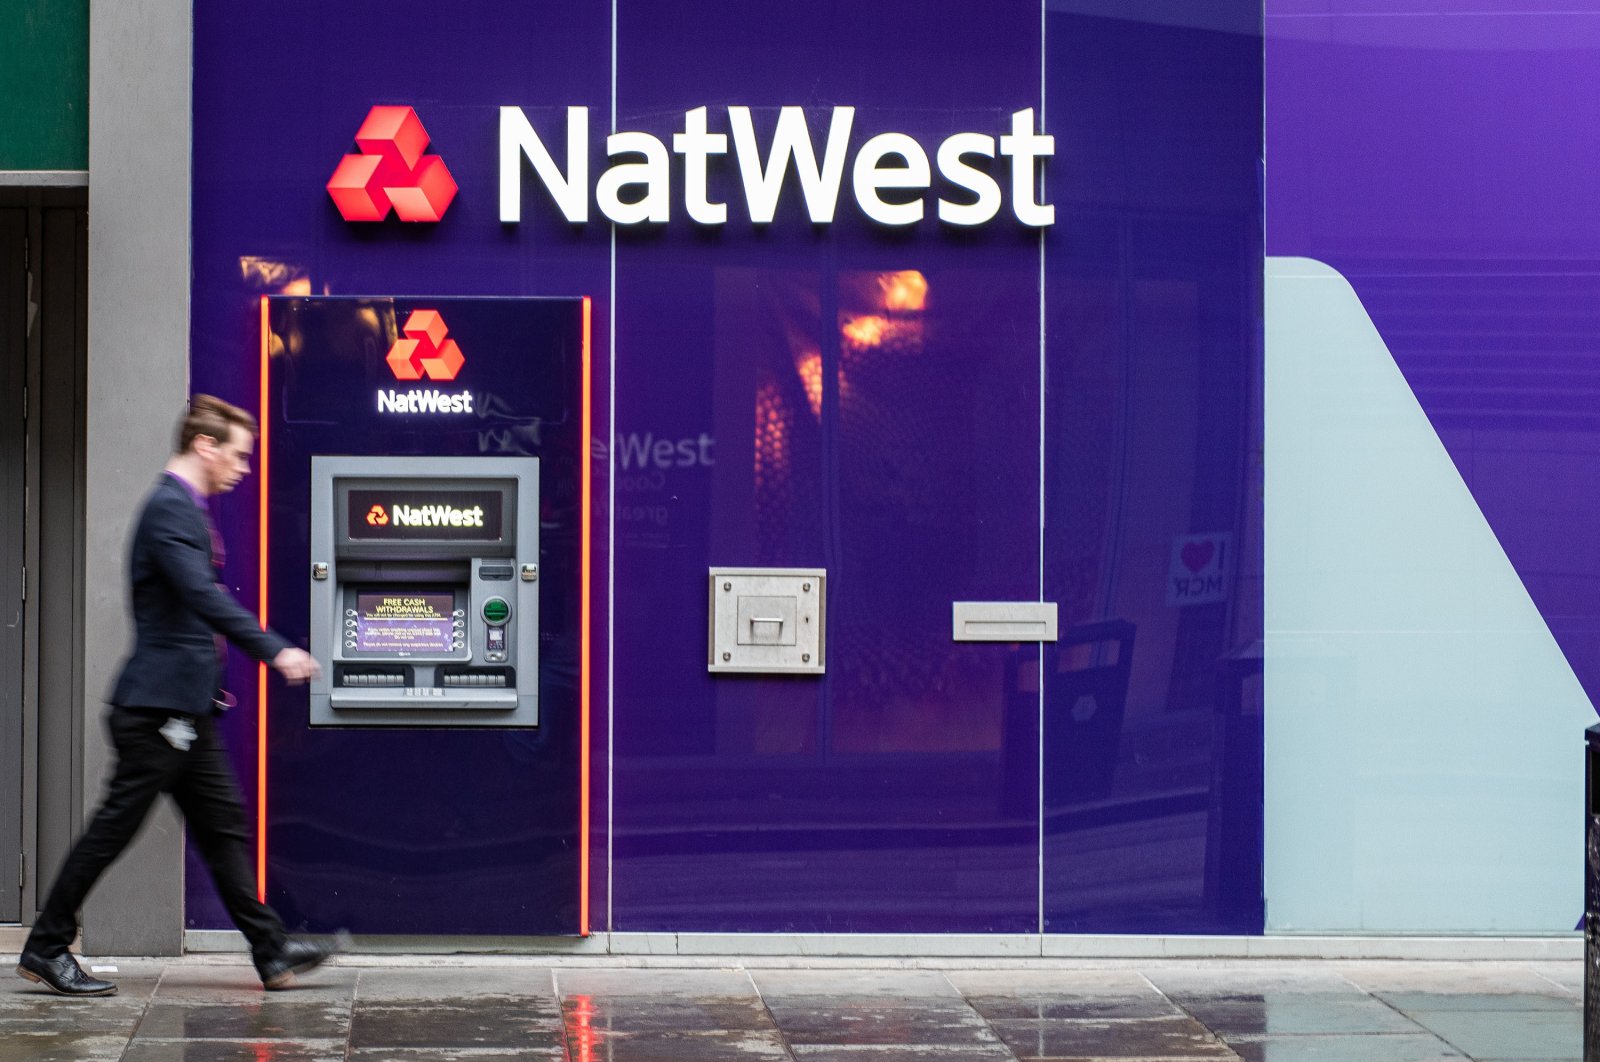 Motion blurred man walks past a Natwest Bank cash machine, Manchester, U.K., July 6, 2019. (Shutterstock Photo)